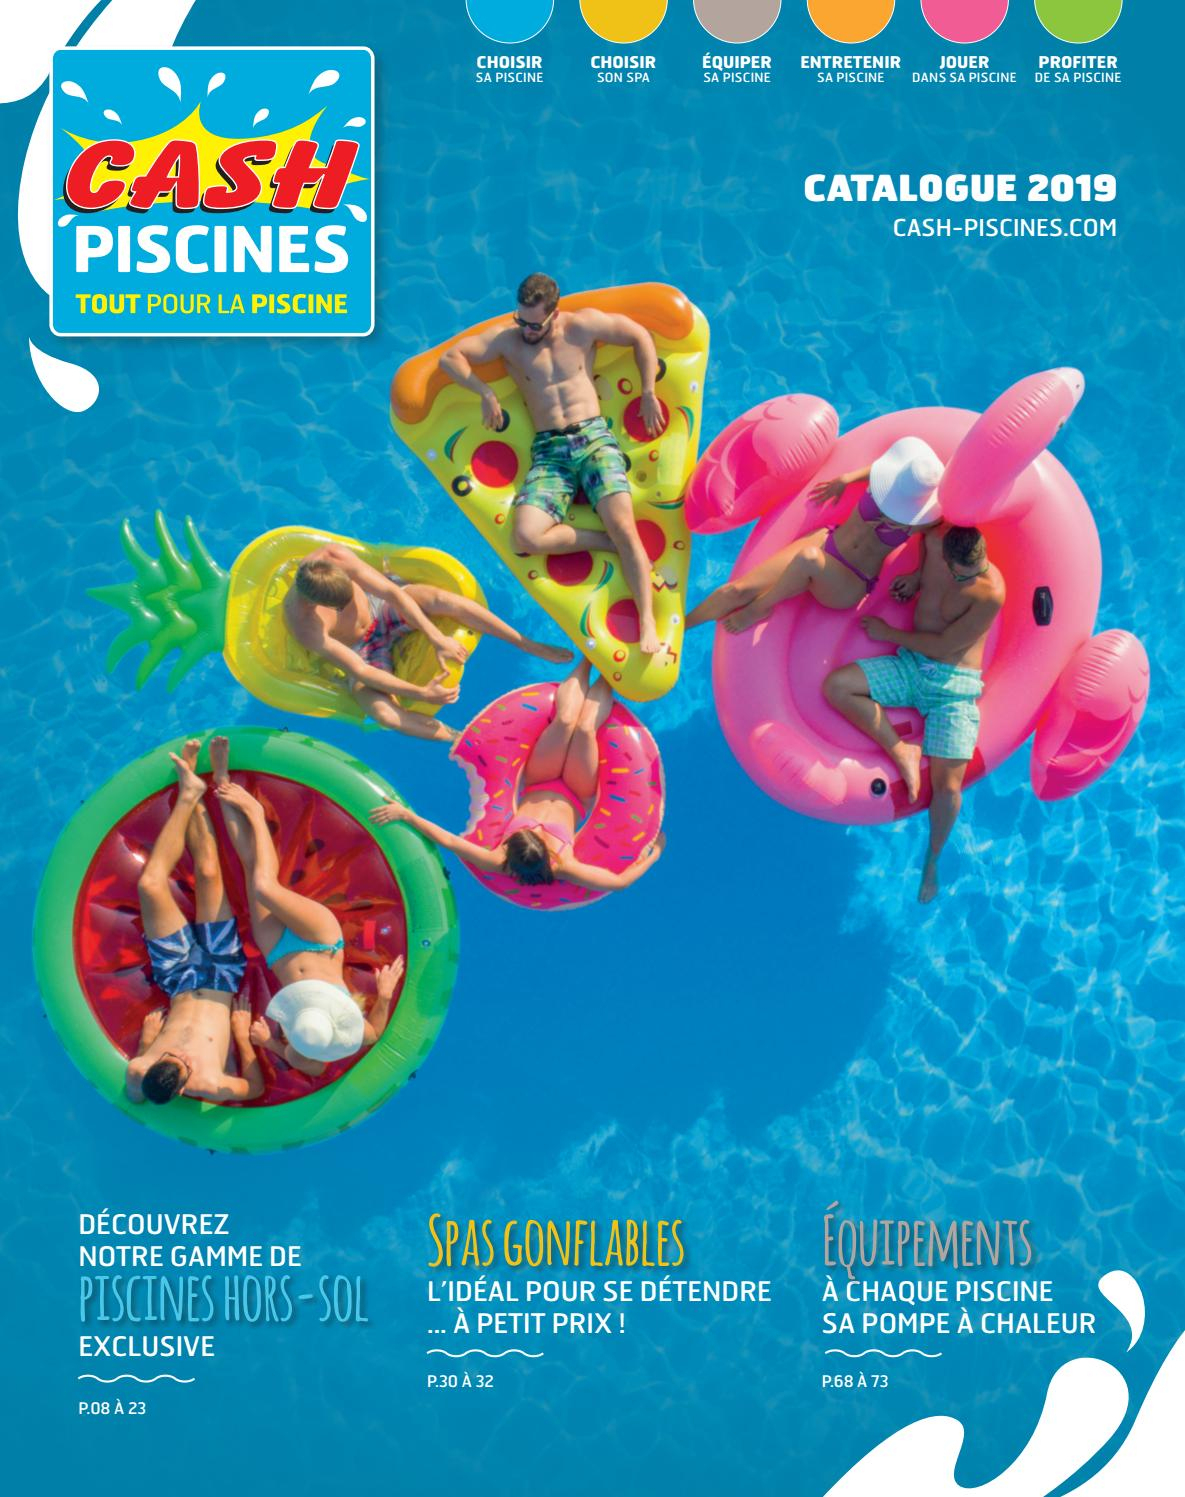 Catalogue Cash Piscines 2019 By Cashpiscines2 - Issuu concernant Cash Piscine Catalogue